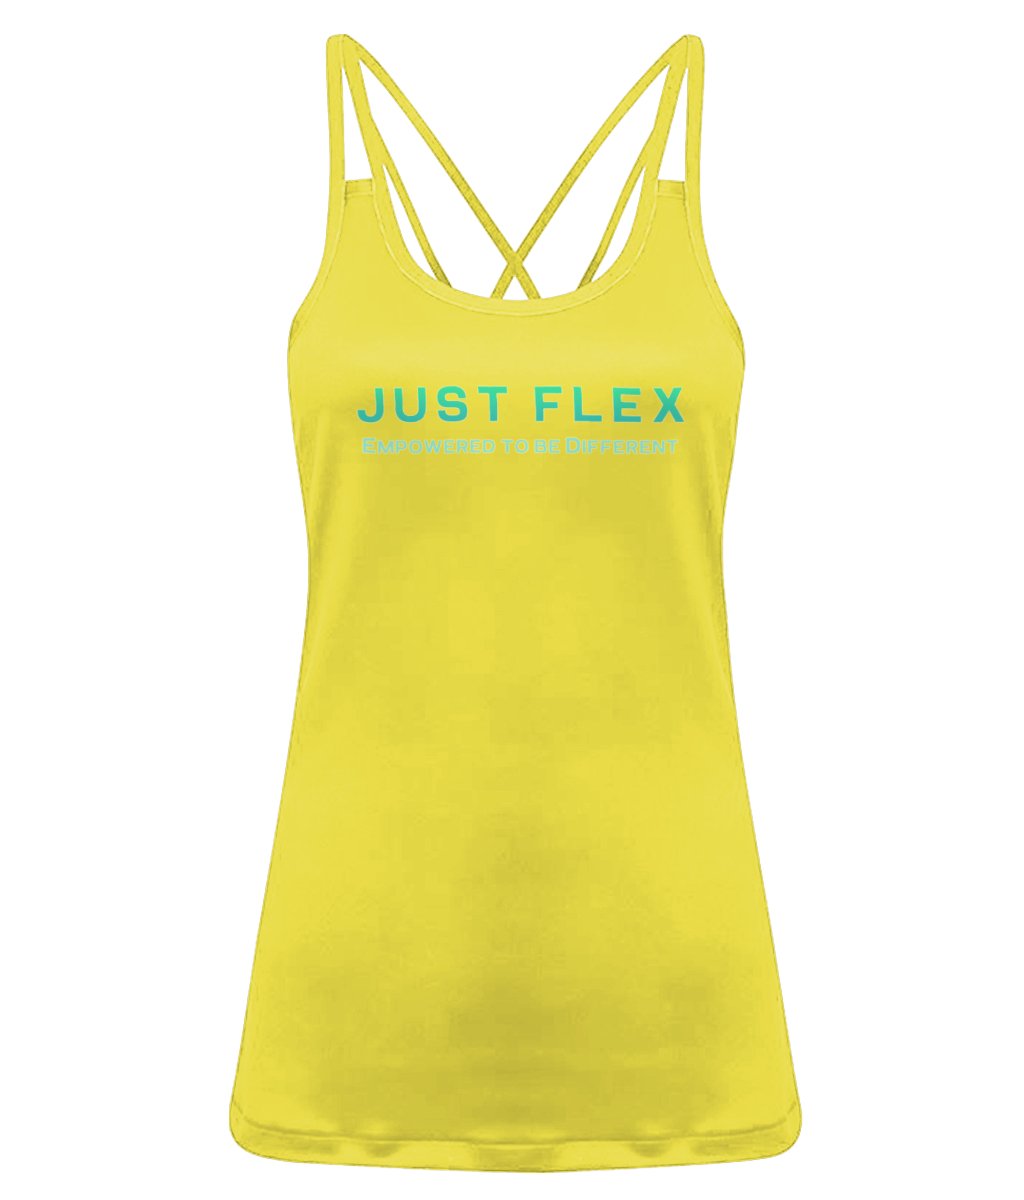 Just Flex - Empowered To Be Different Women's TriDri® 'Laser Cut' Spaghetti Strap Vest - Just Flex